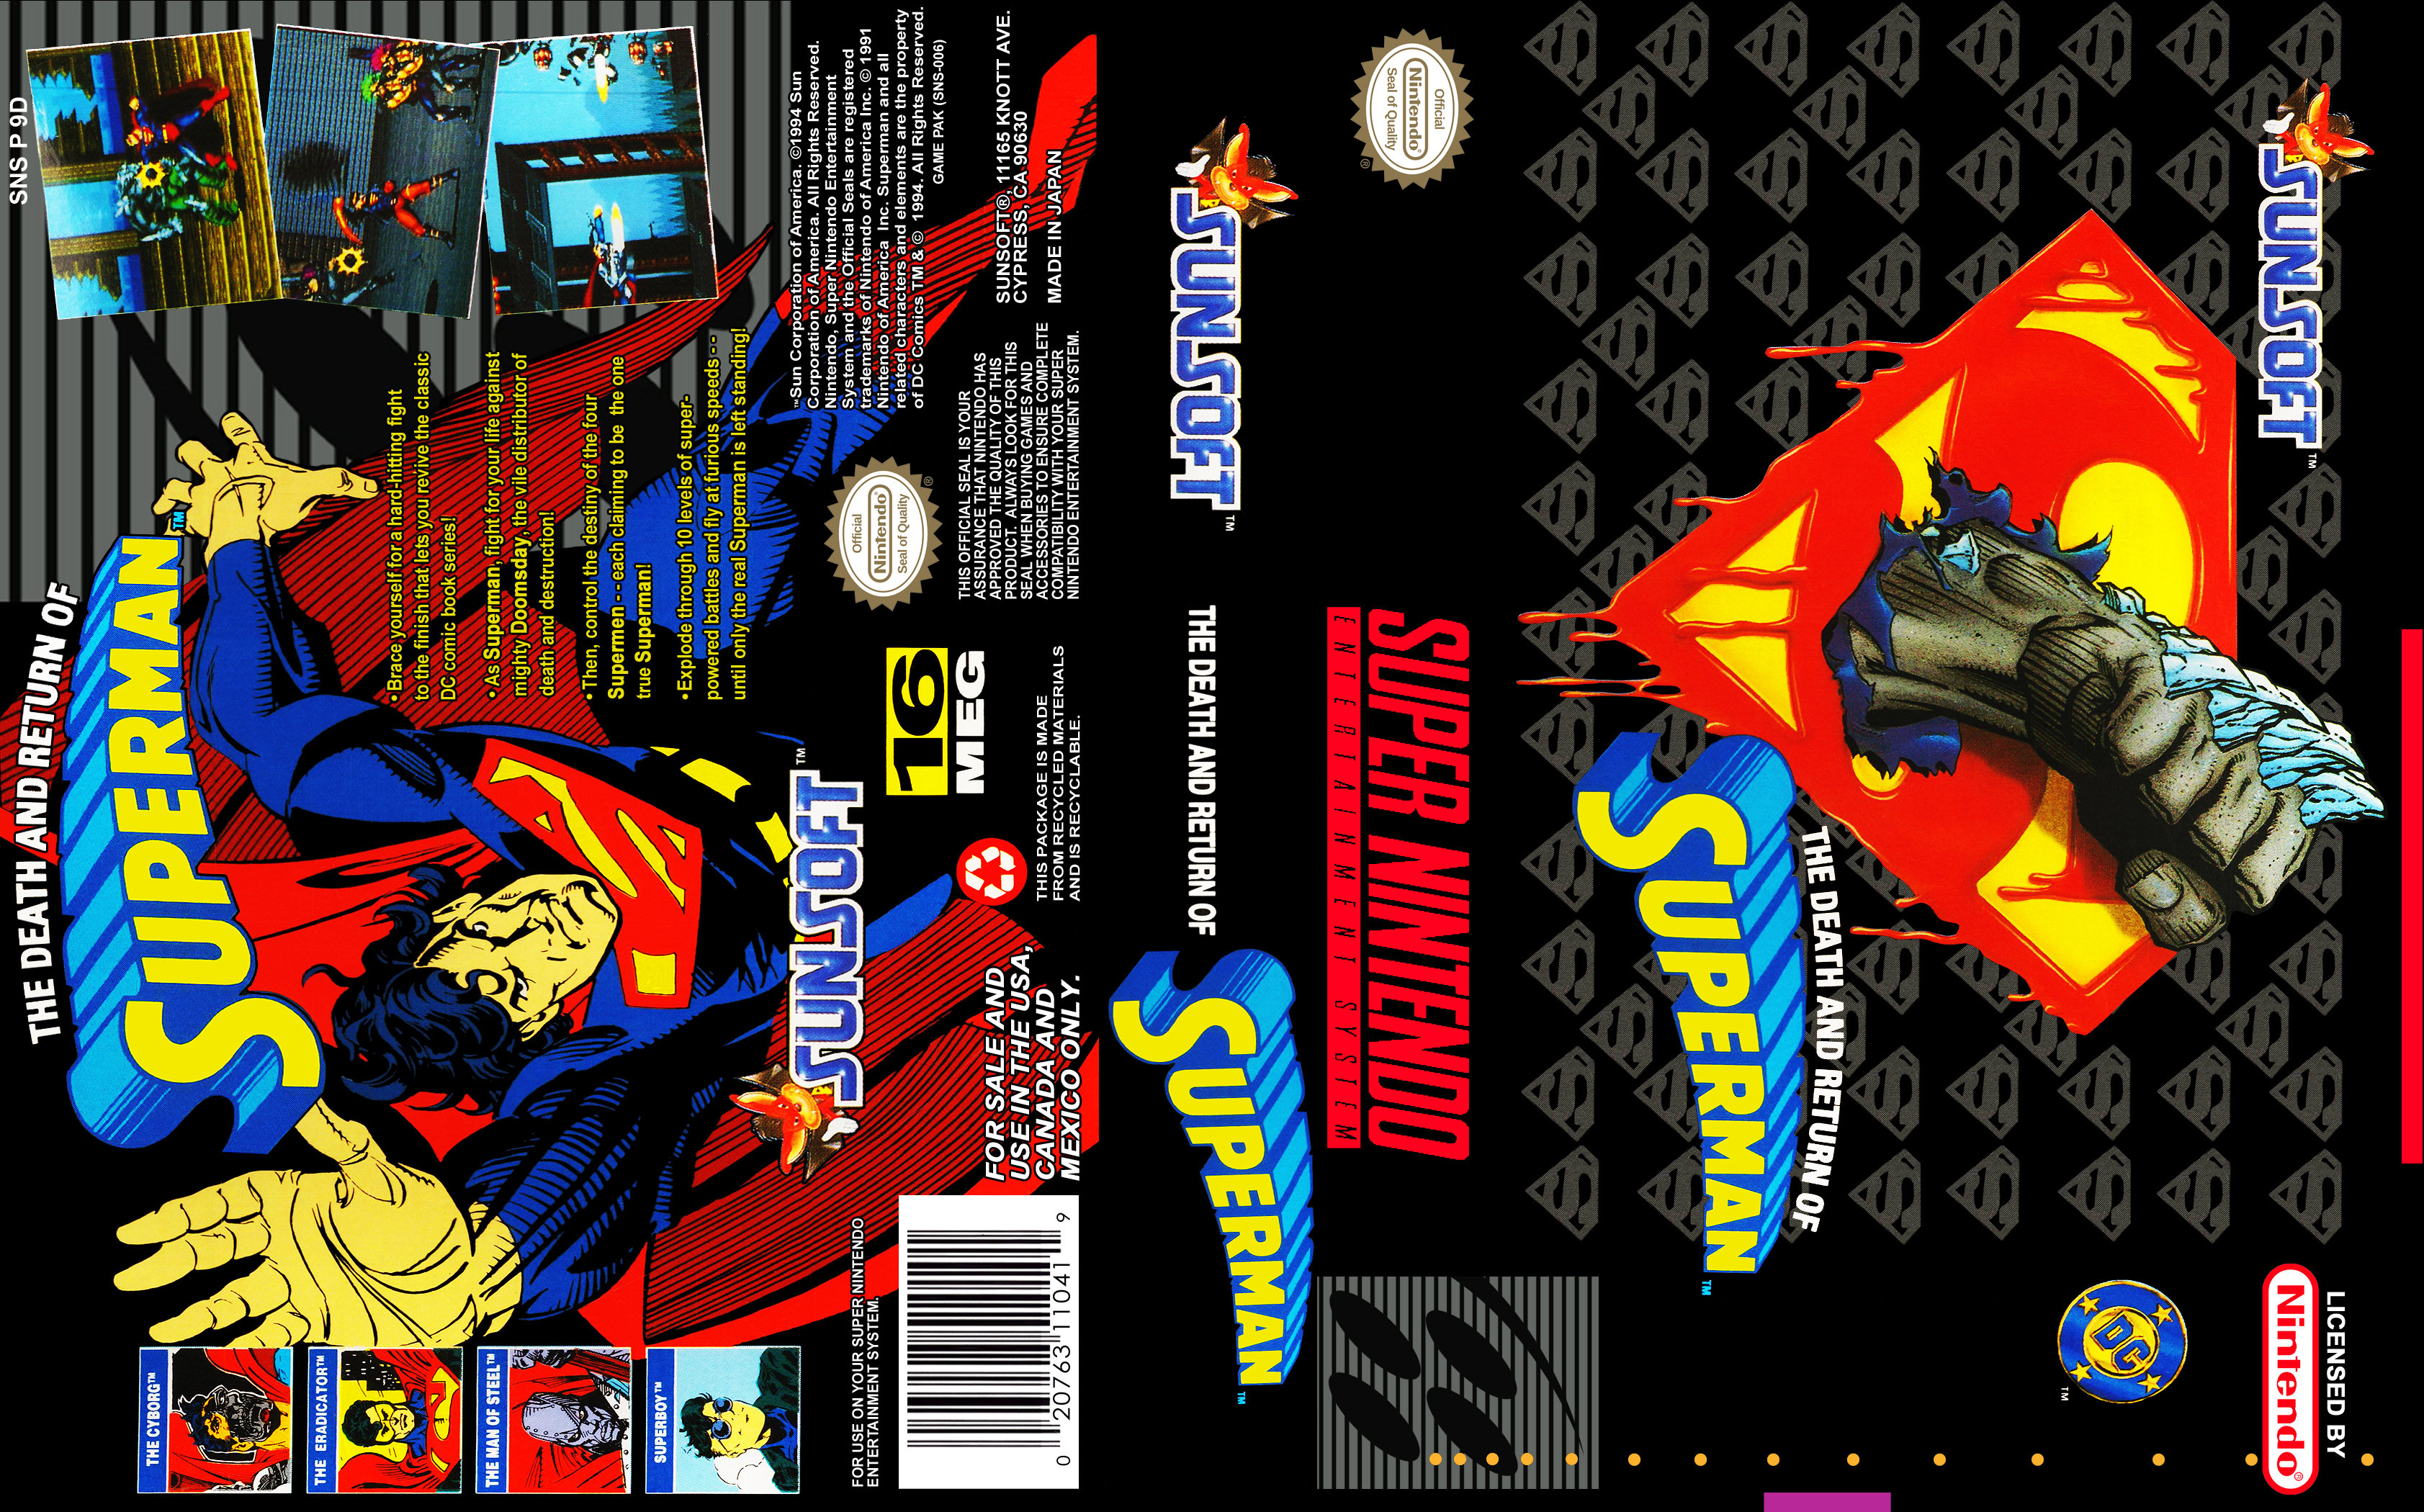 death and return of superman sega